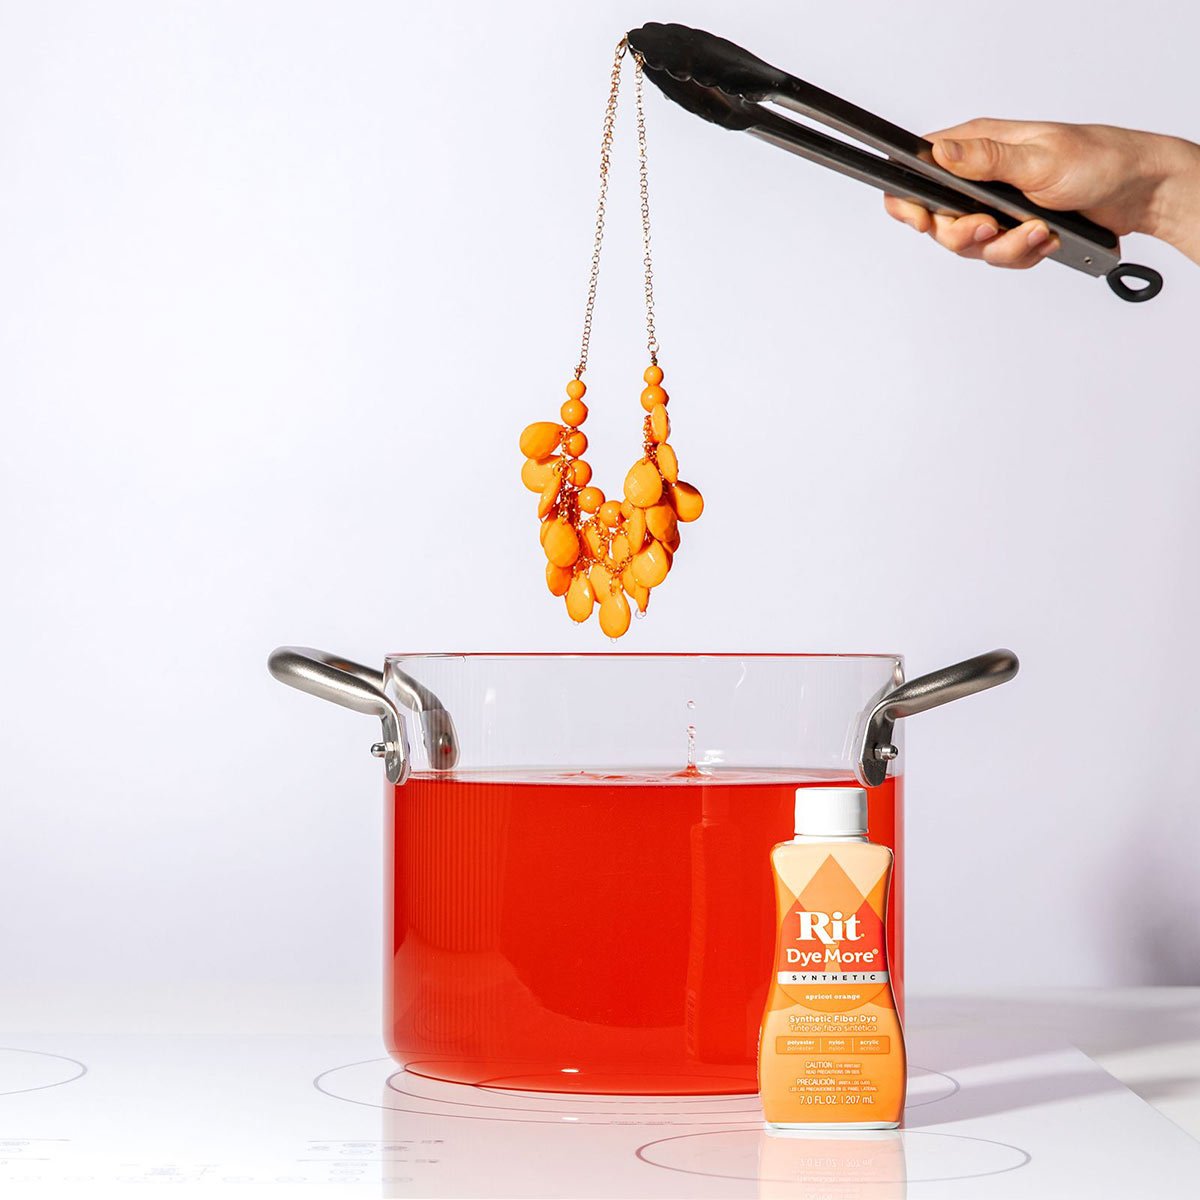 Rit DyeMore Synthetic Liquid - 7oz - Apricot Orange –